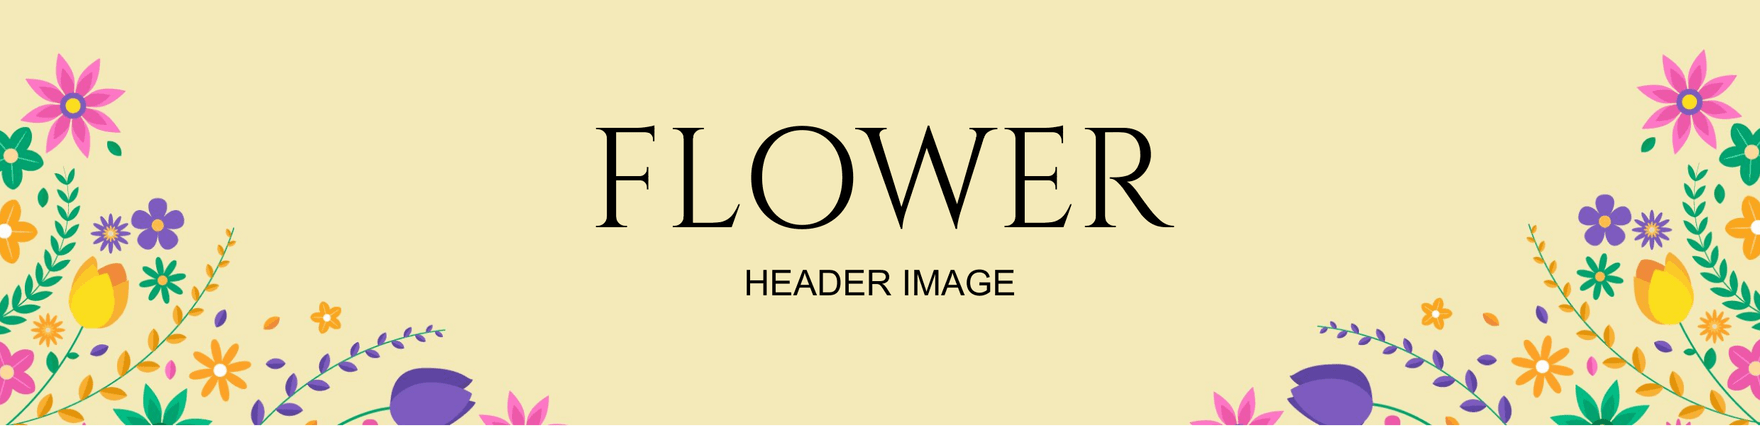 Flower Header Image Template